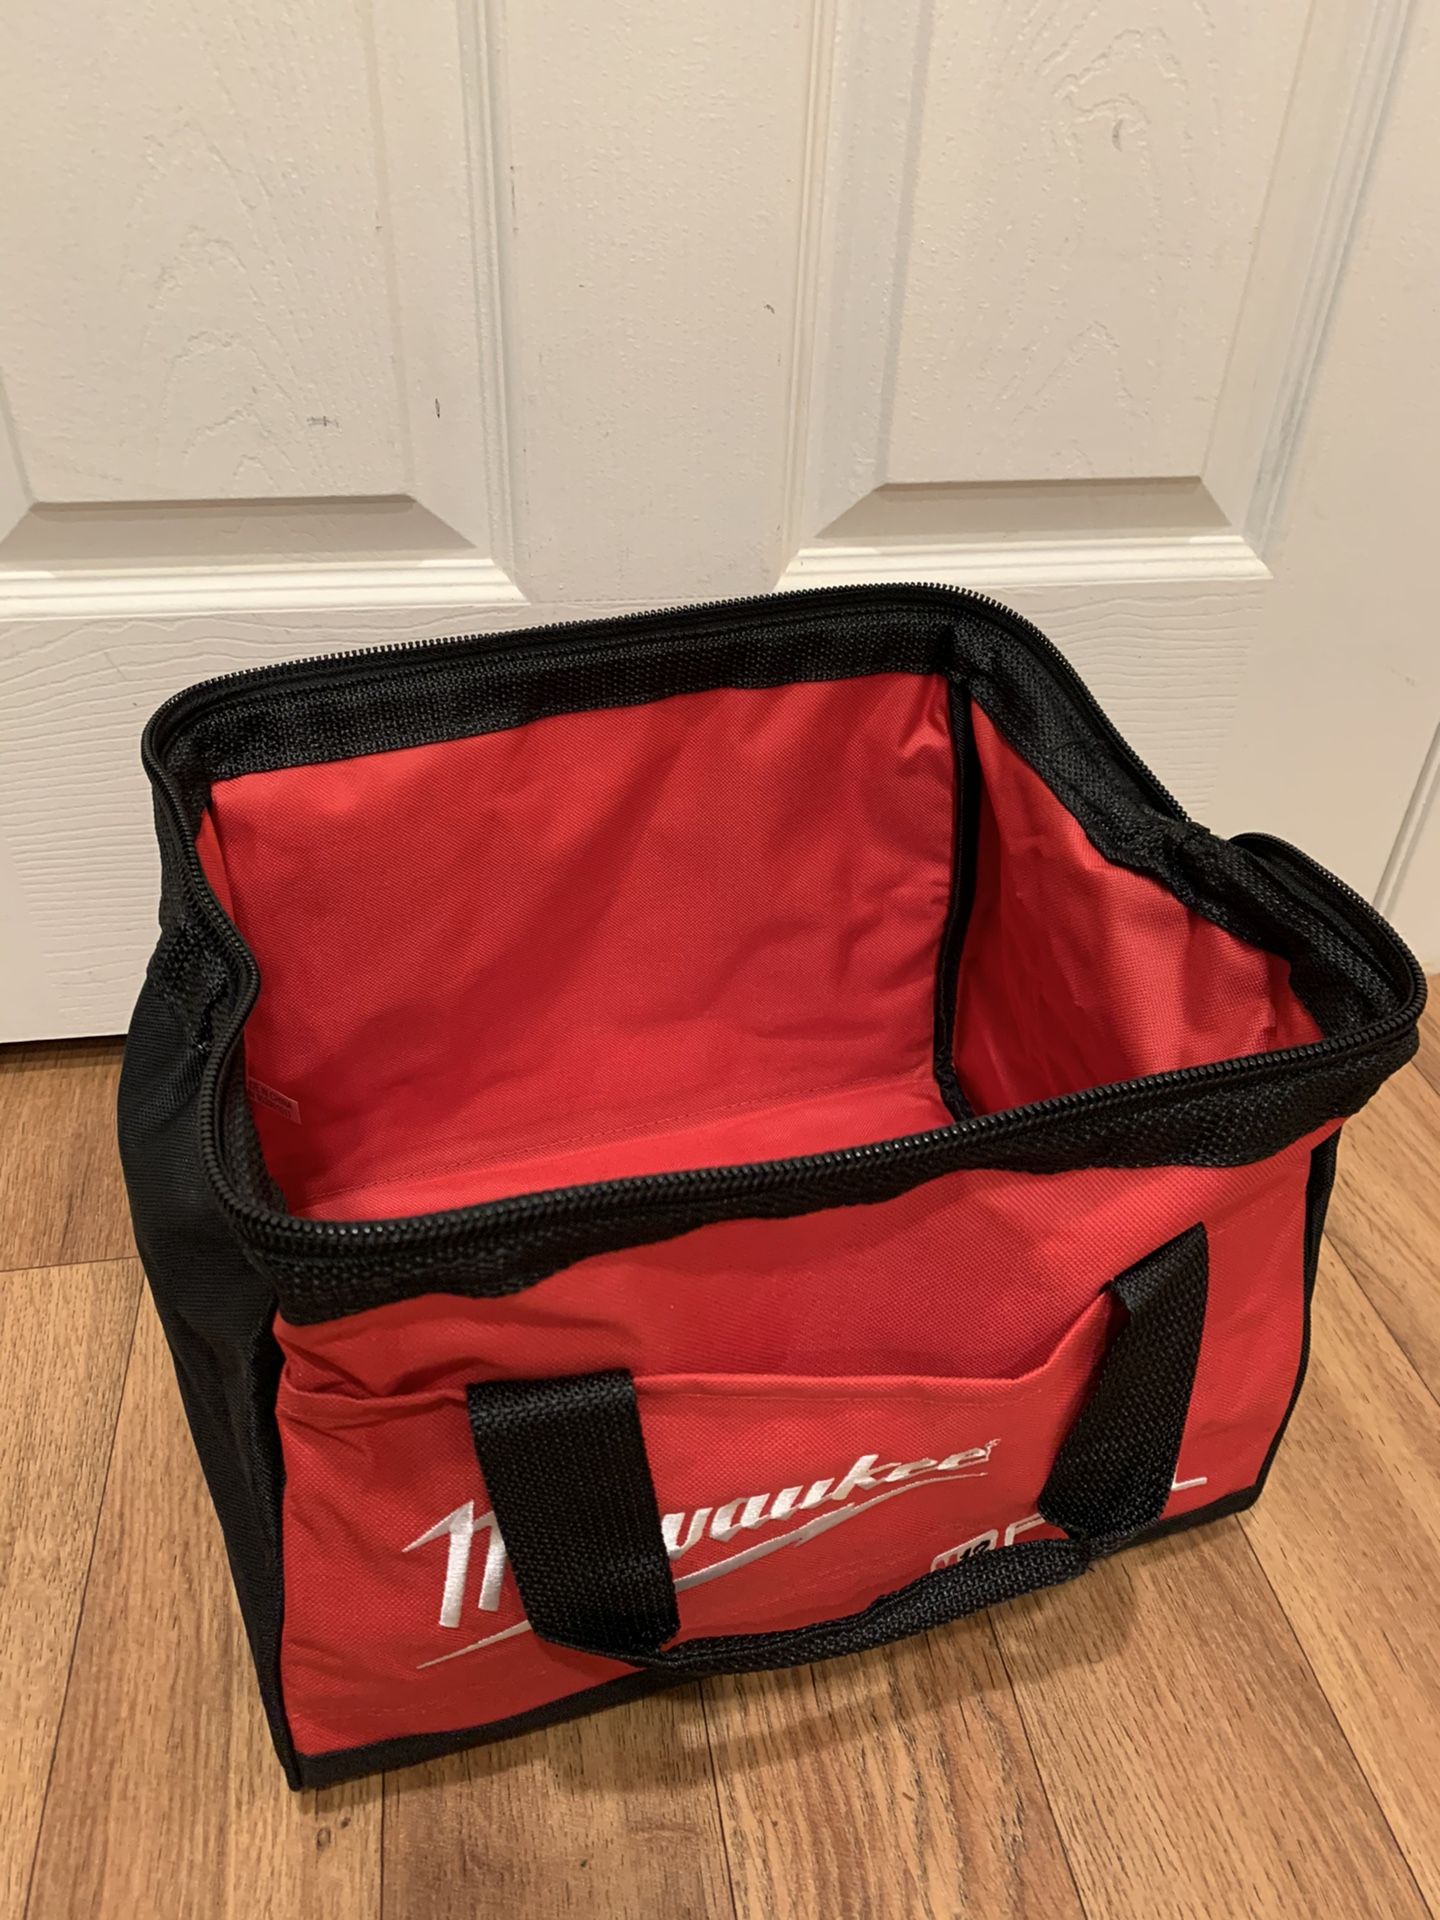 Milwaukee medium size tool bag. $20 firm